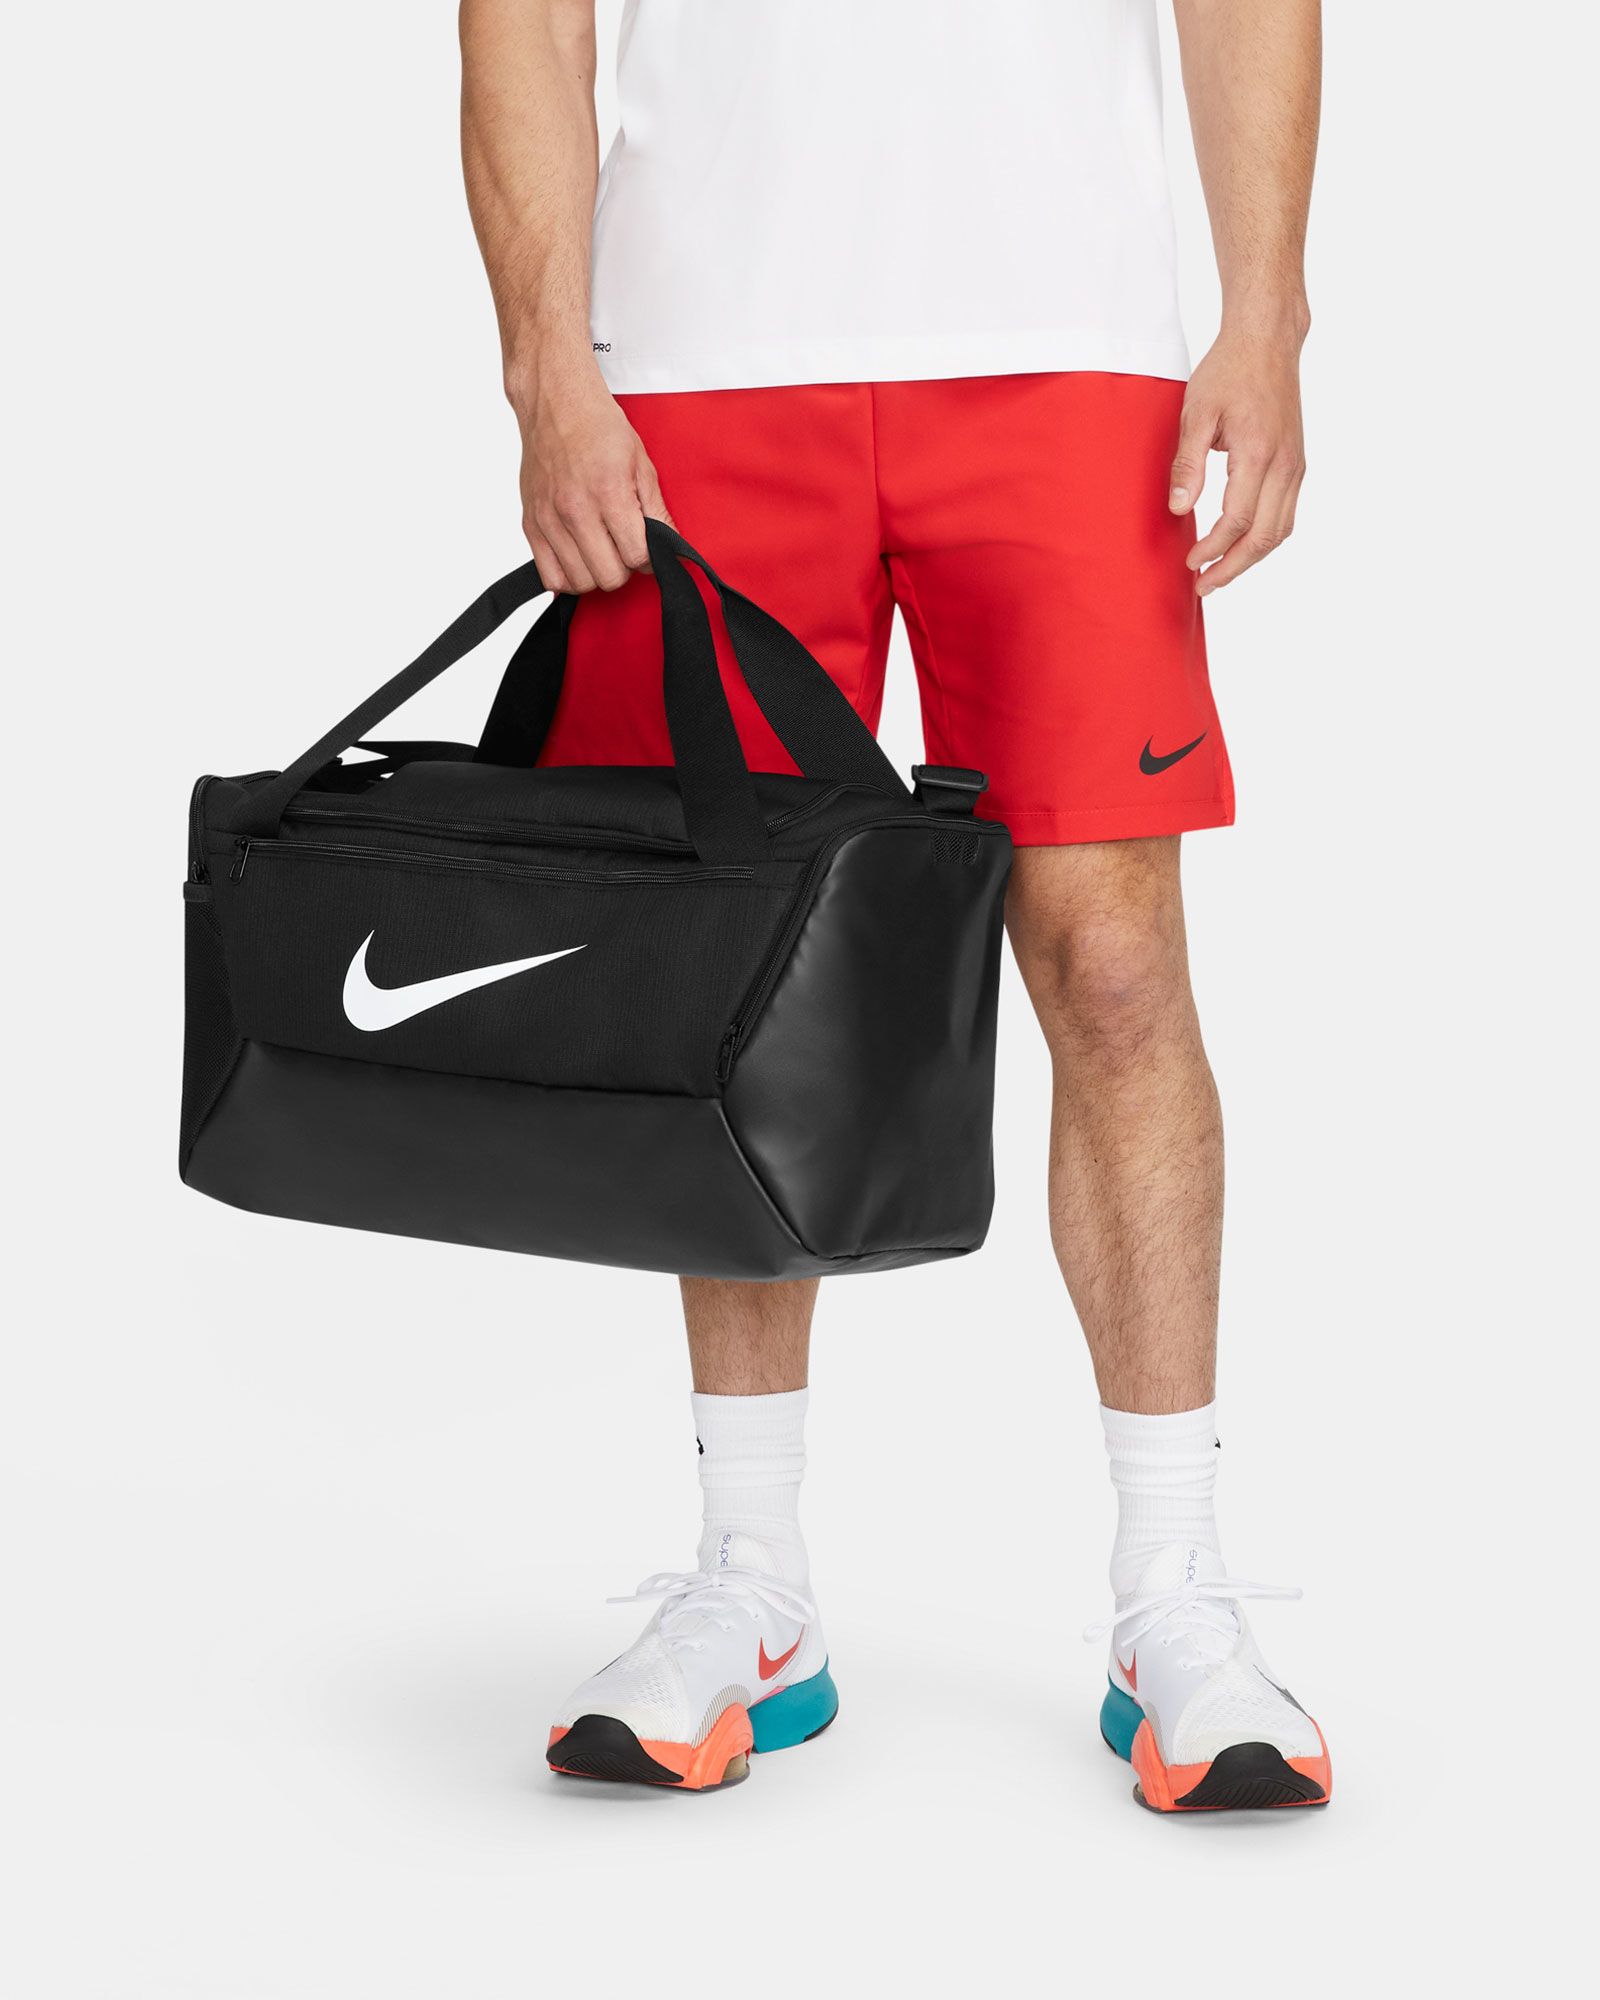 apasionado Exclusión Críticamente Bolsa pequeña de deporte Nike Brasilia